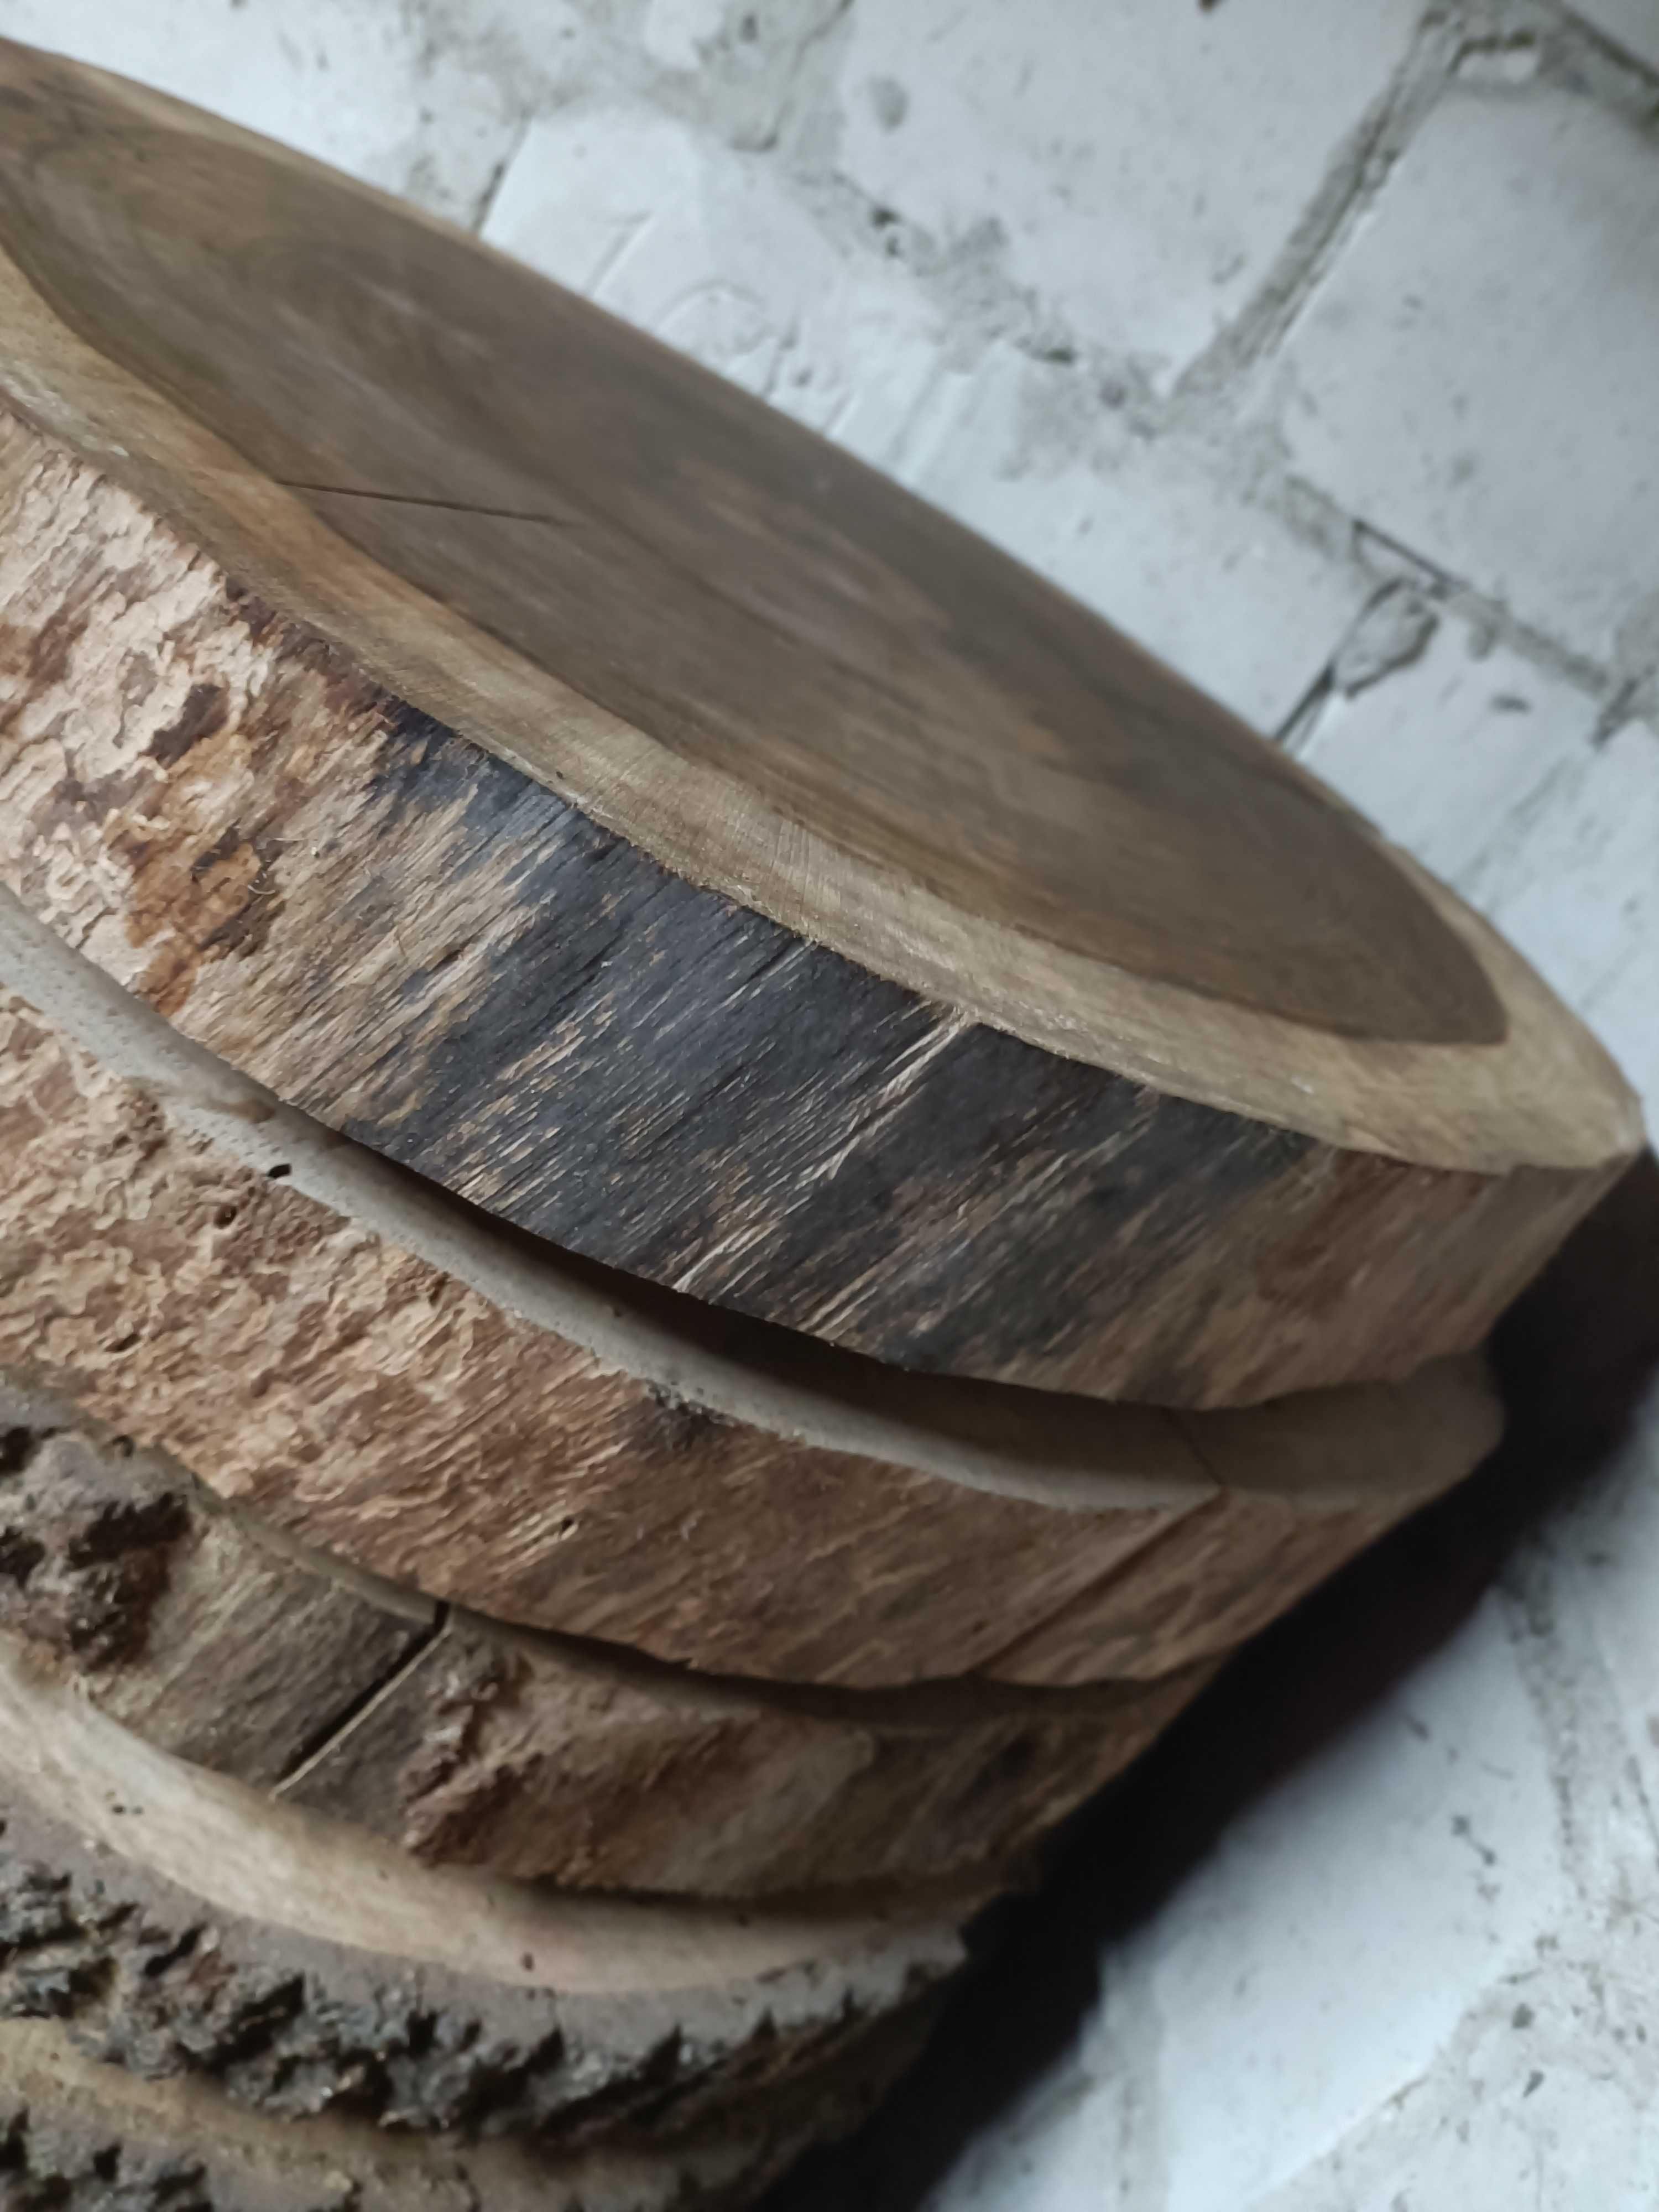 Plaster drewna dąb 70-85 cm  sezonowane cięte na traku szlifowane